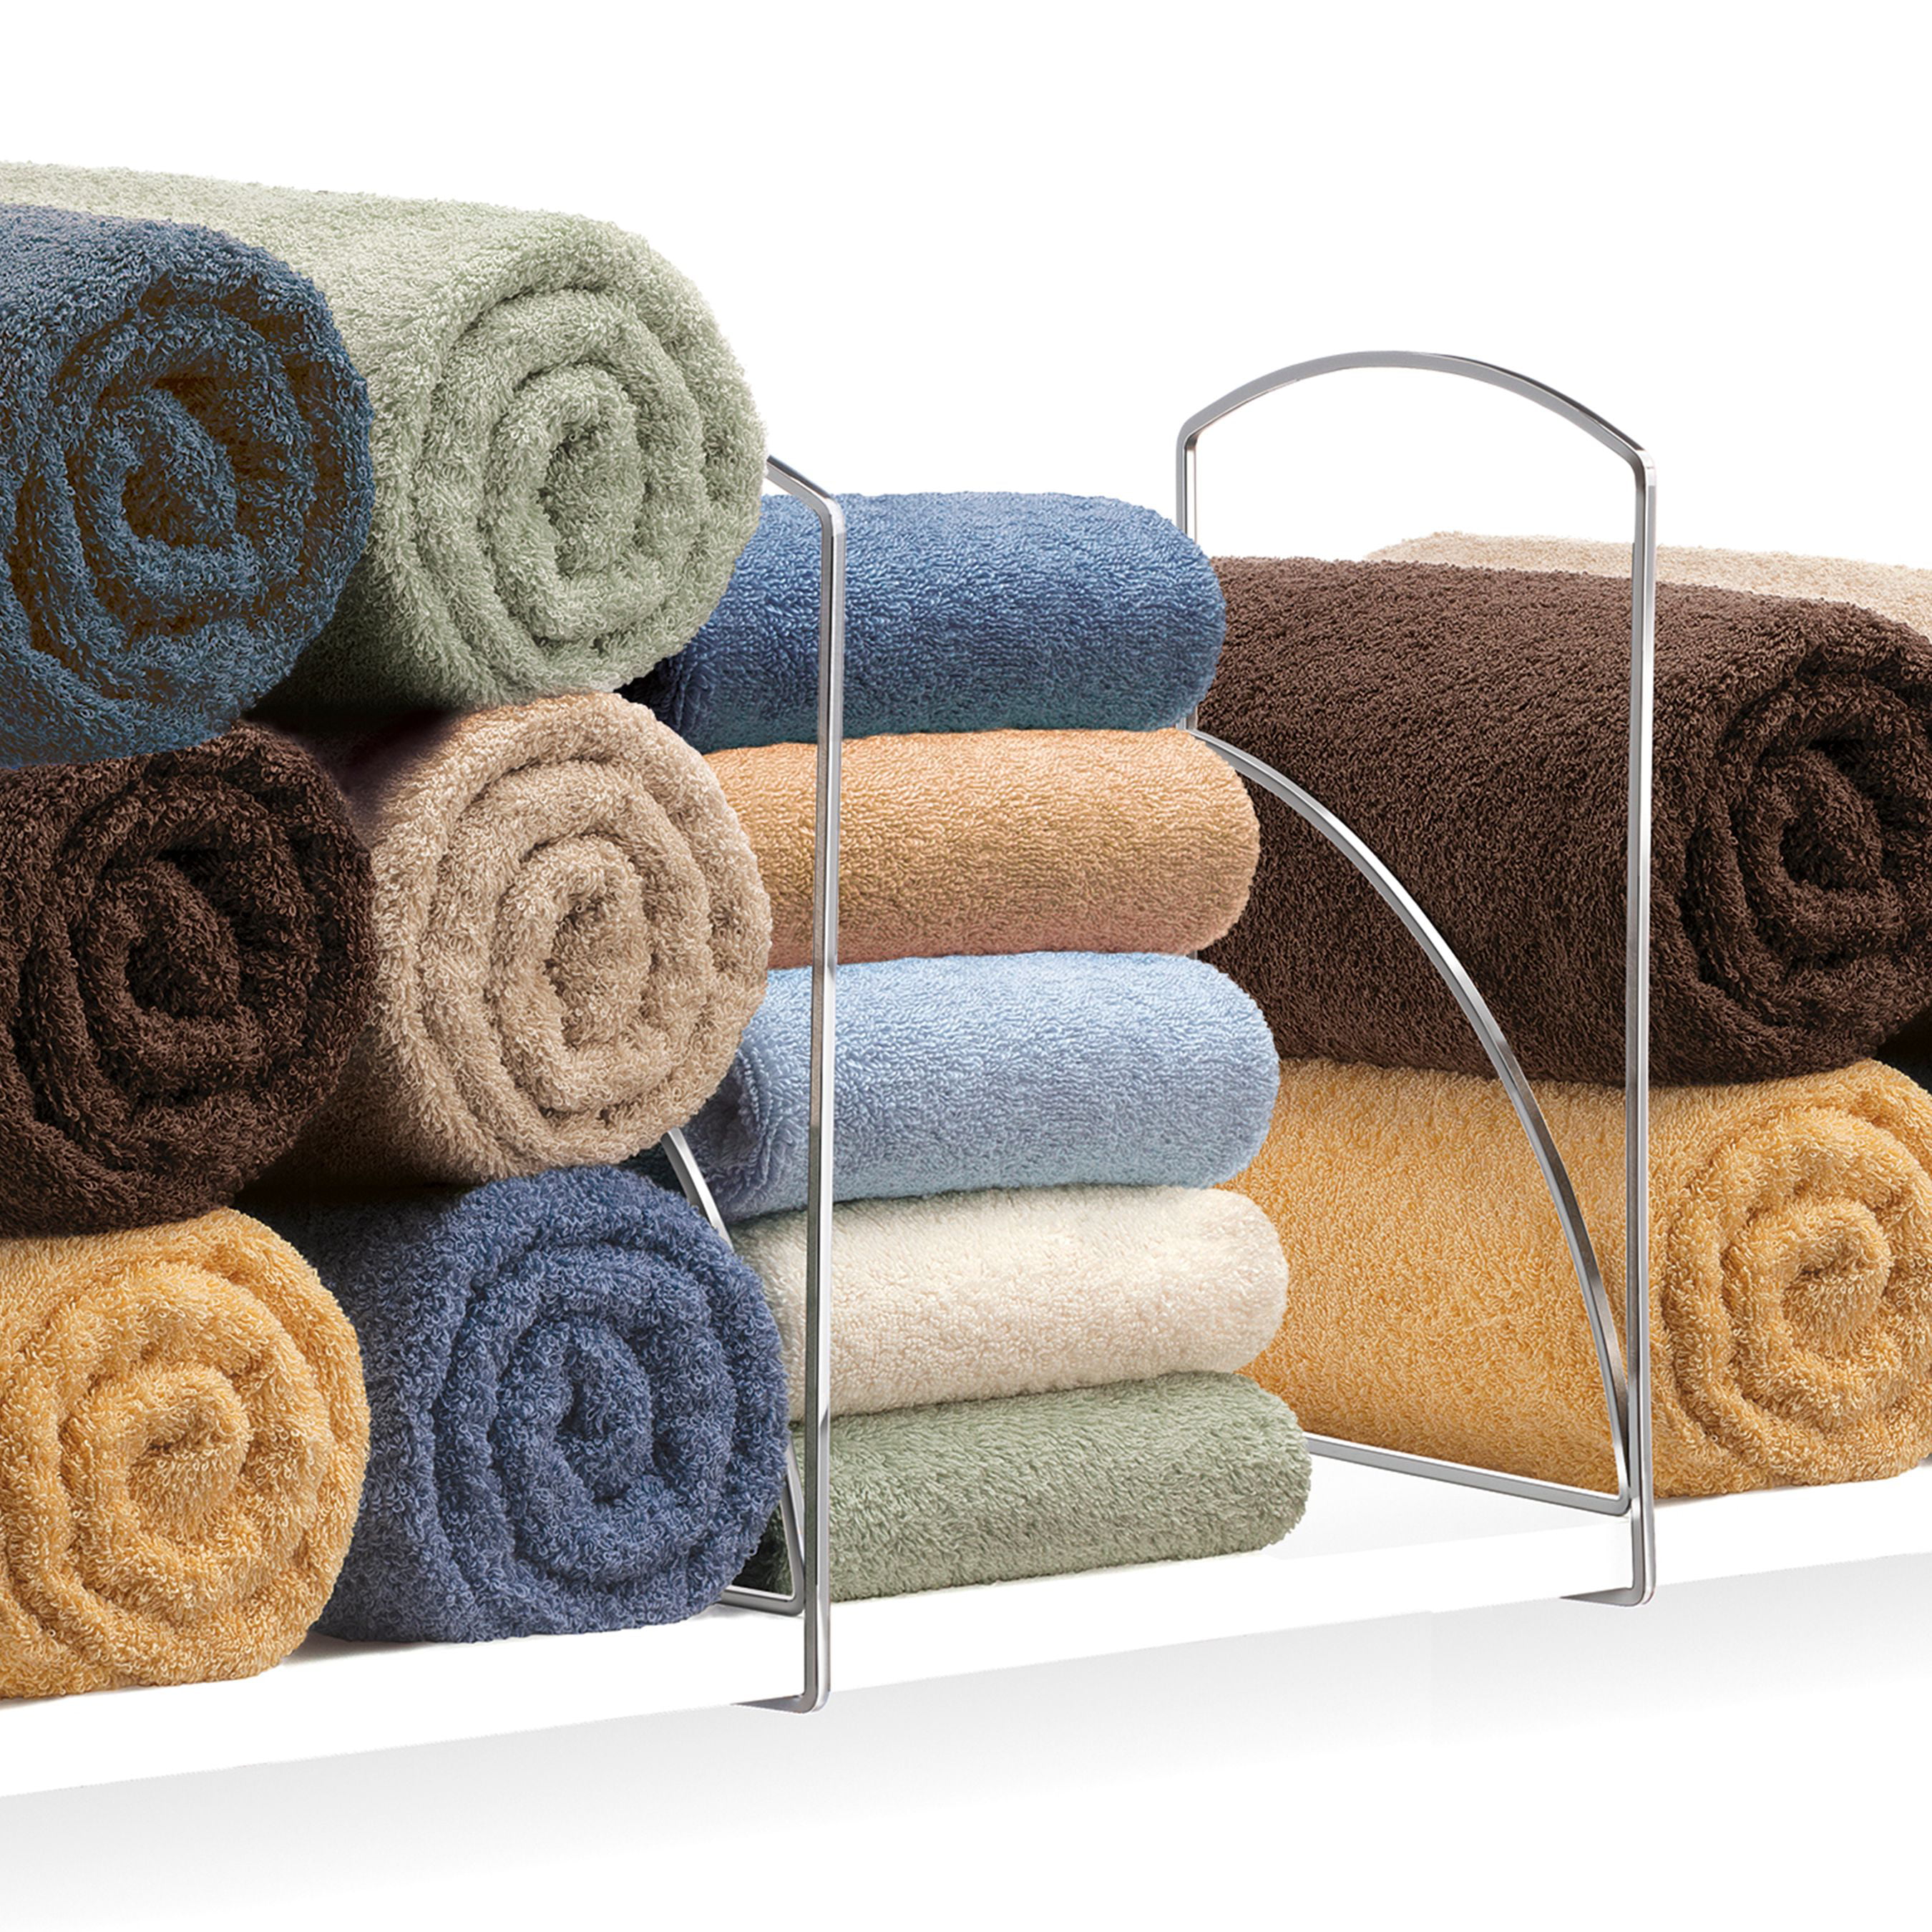 Purse Towels 8 White Sweater StorageMaid Metal Shelf Wood Shelves Closet Dividers for Linen Set of 8 